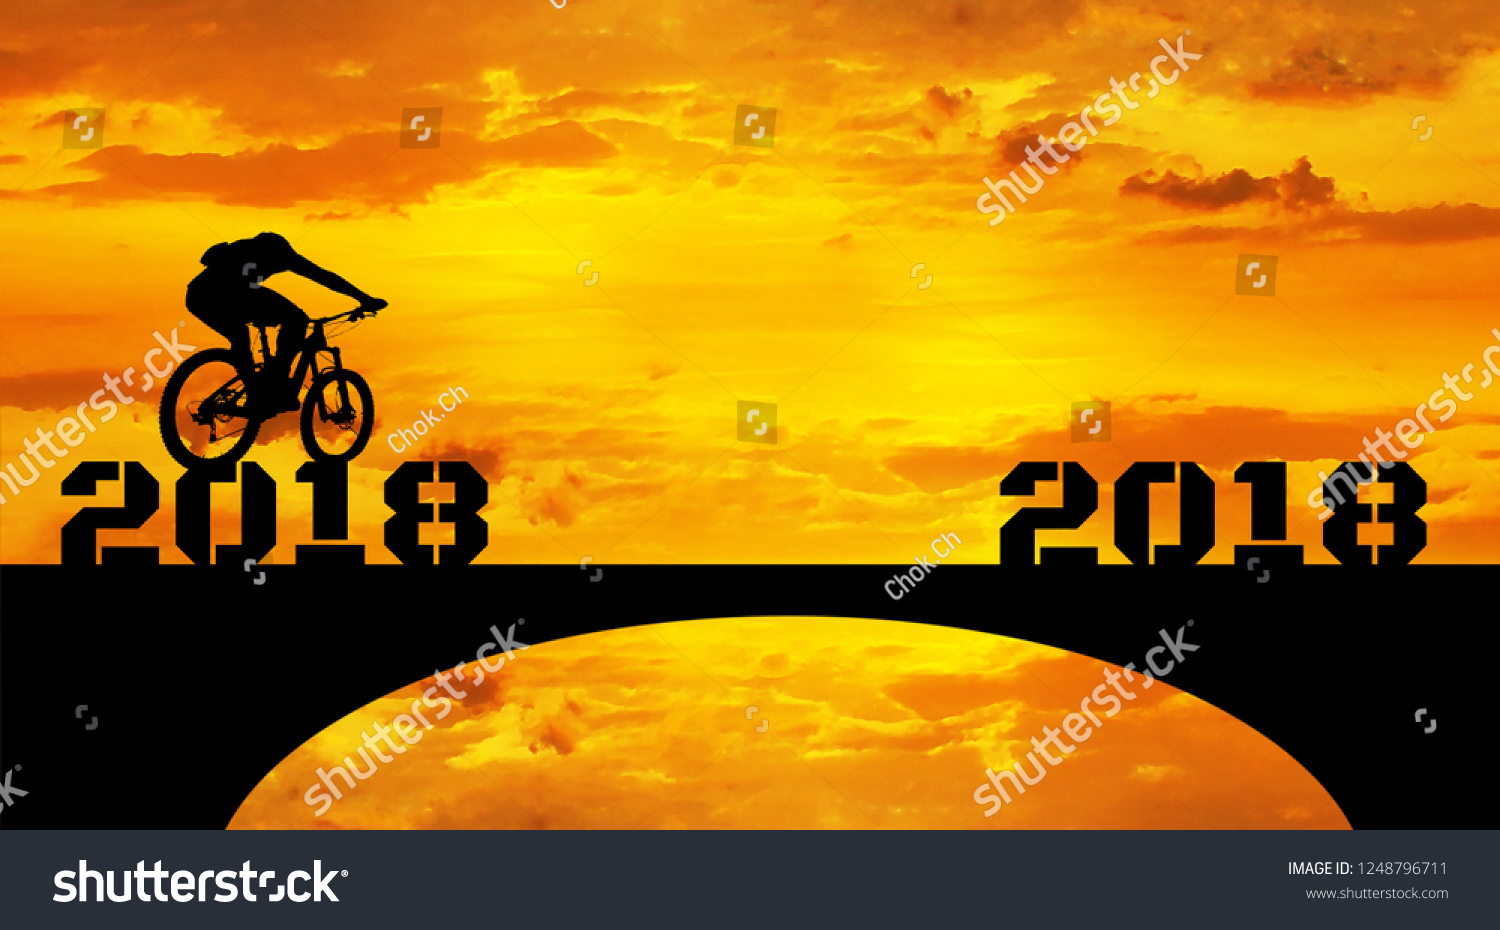 new year bike offers 2019